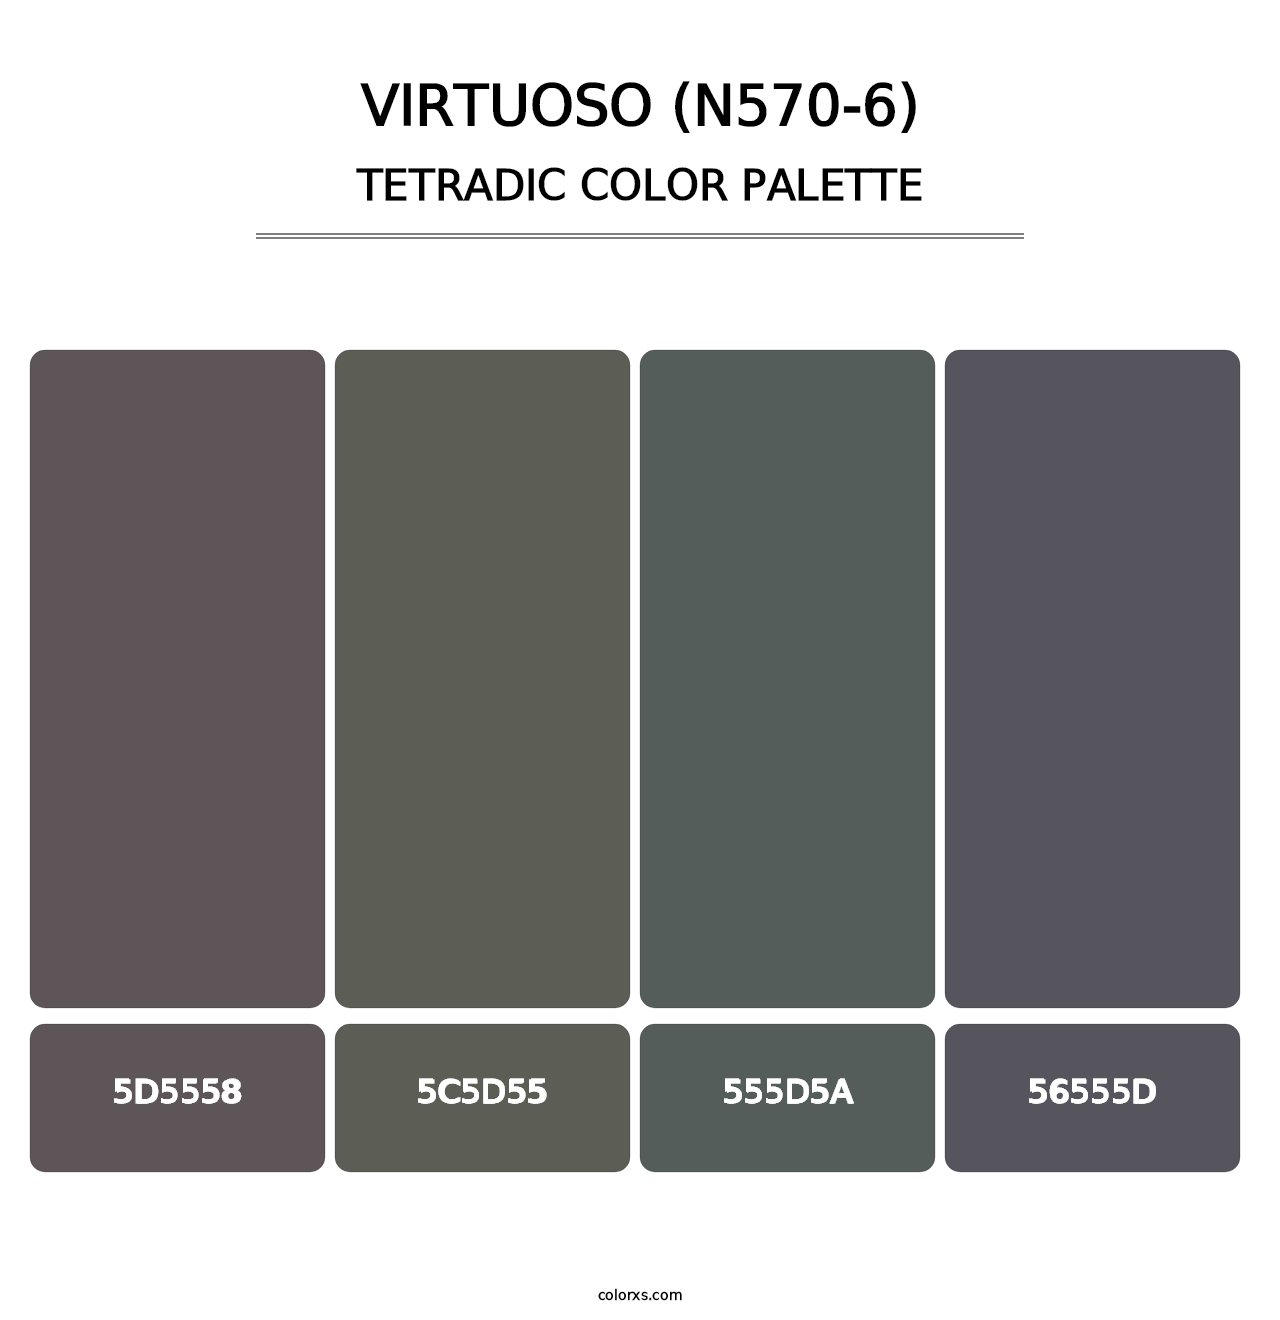 Virtuoso (N570-6) - Tetradic Color Palette